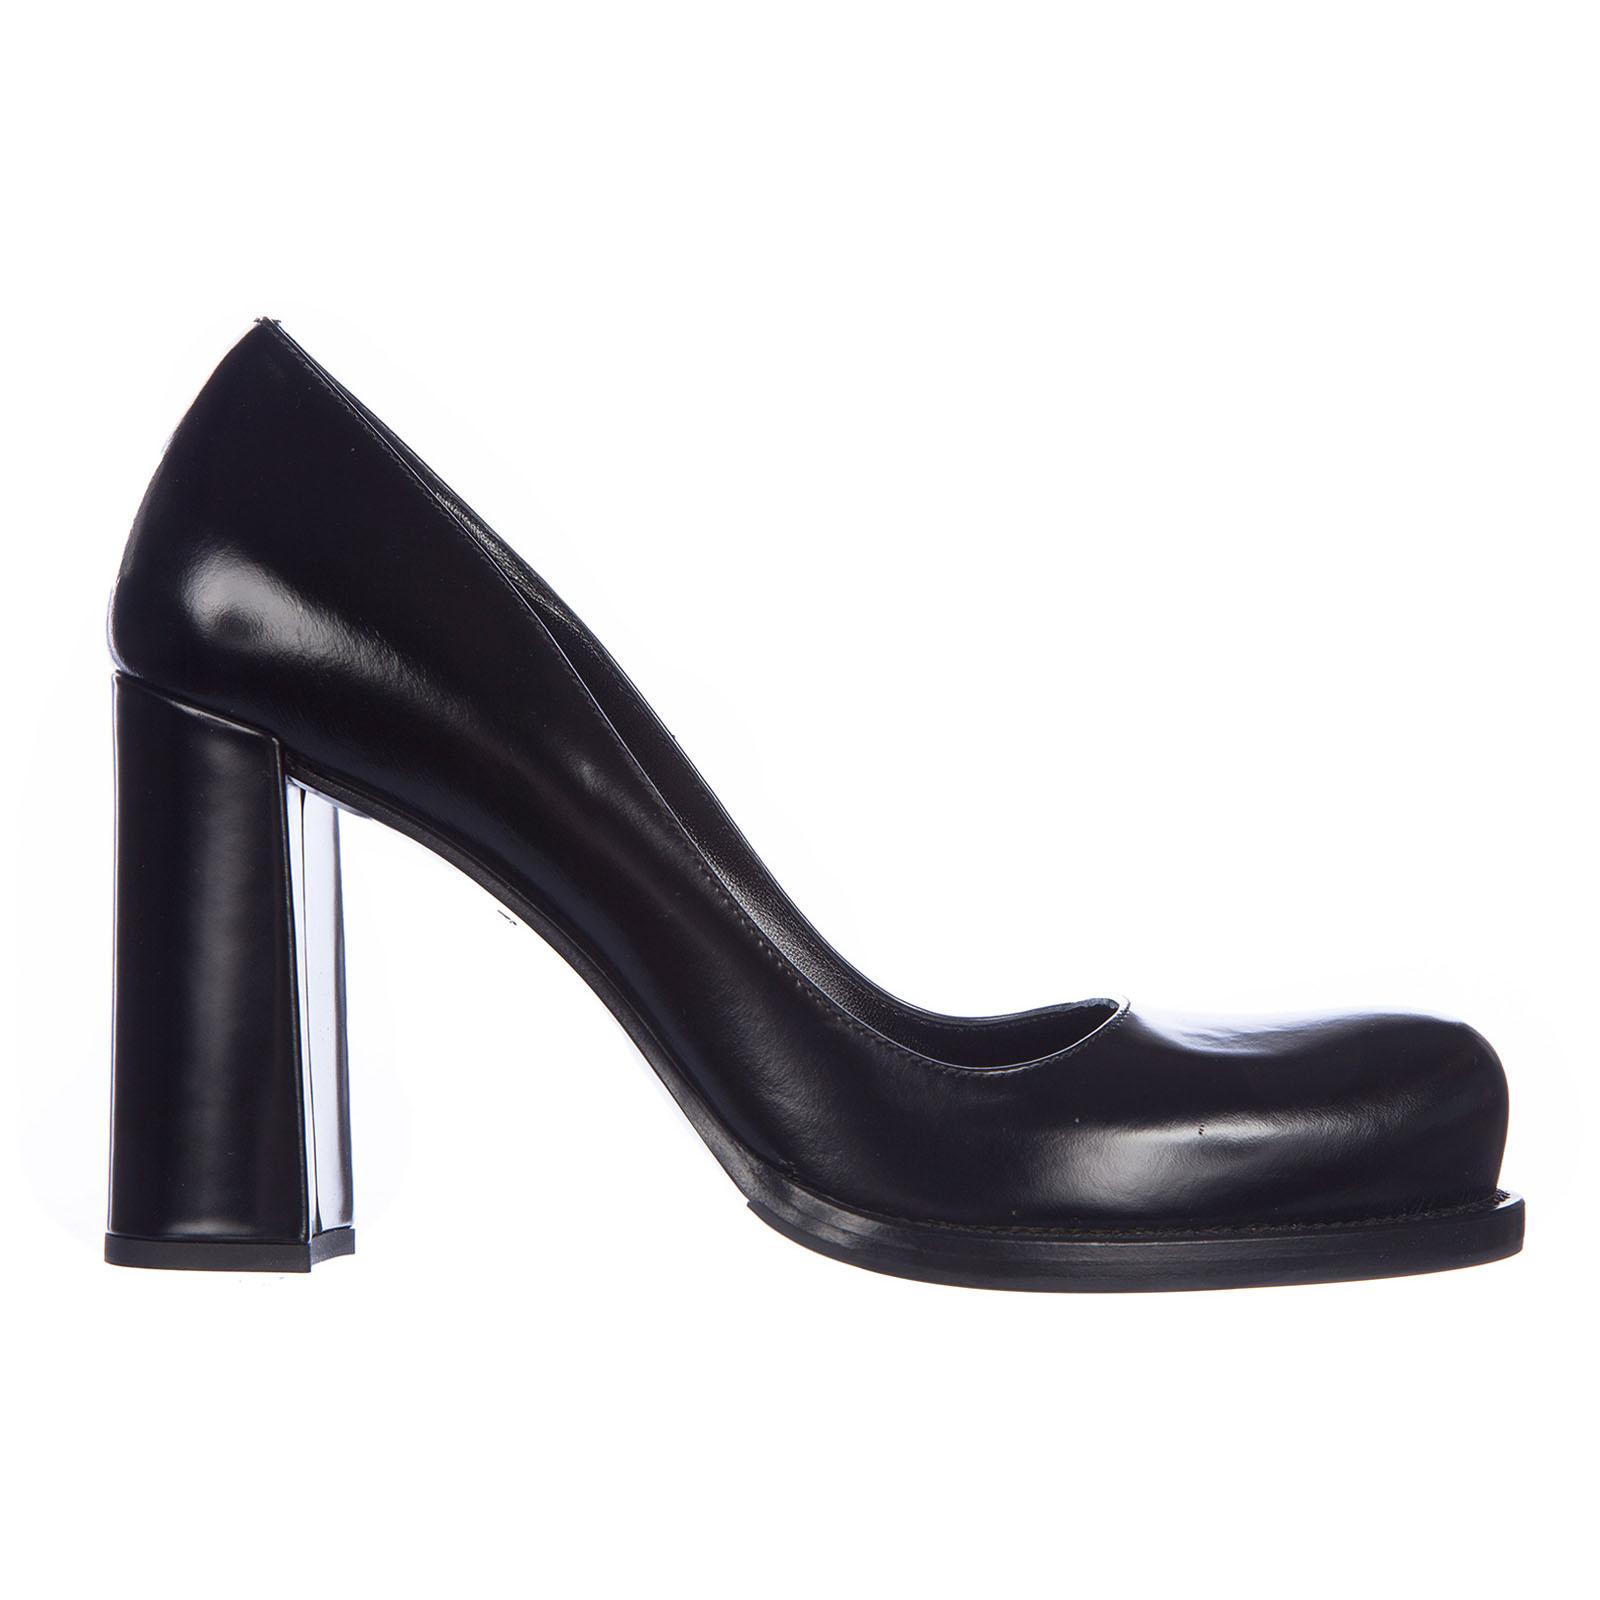 Prada Women's Leather Pumps Court Shoes High Heel in Nero (Black) - Lyst